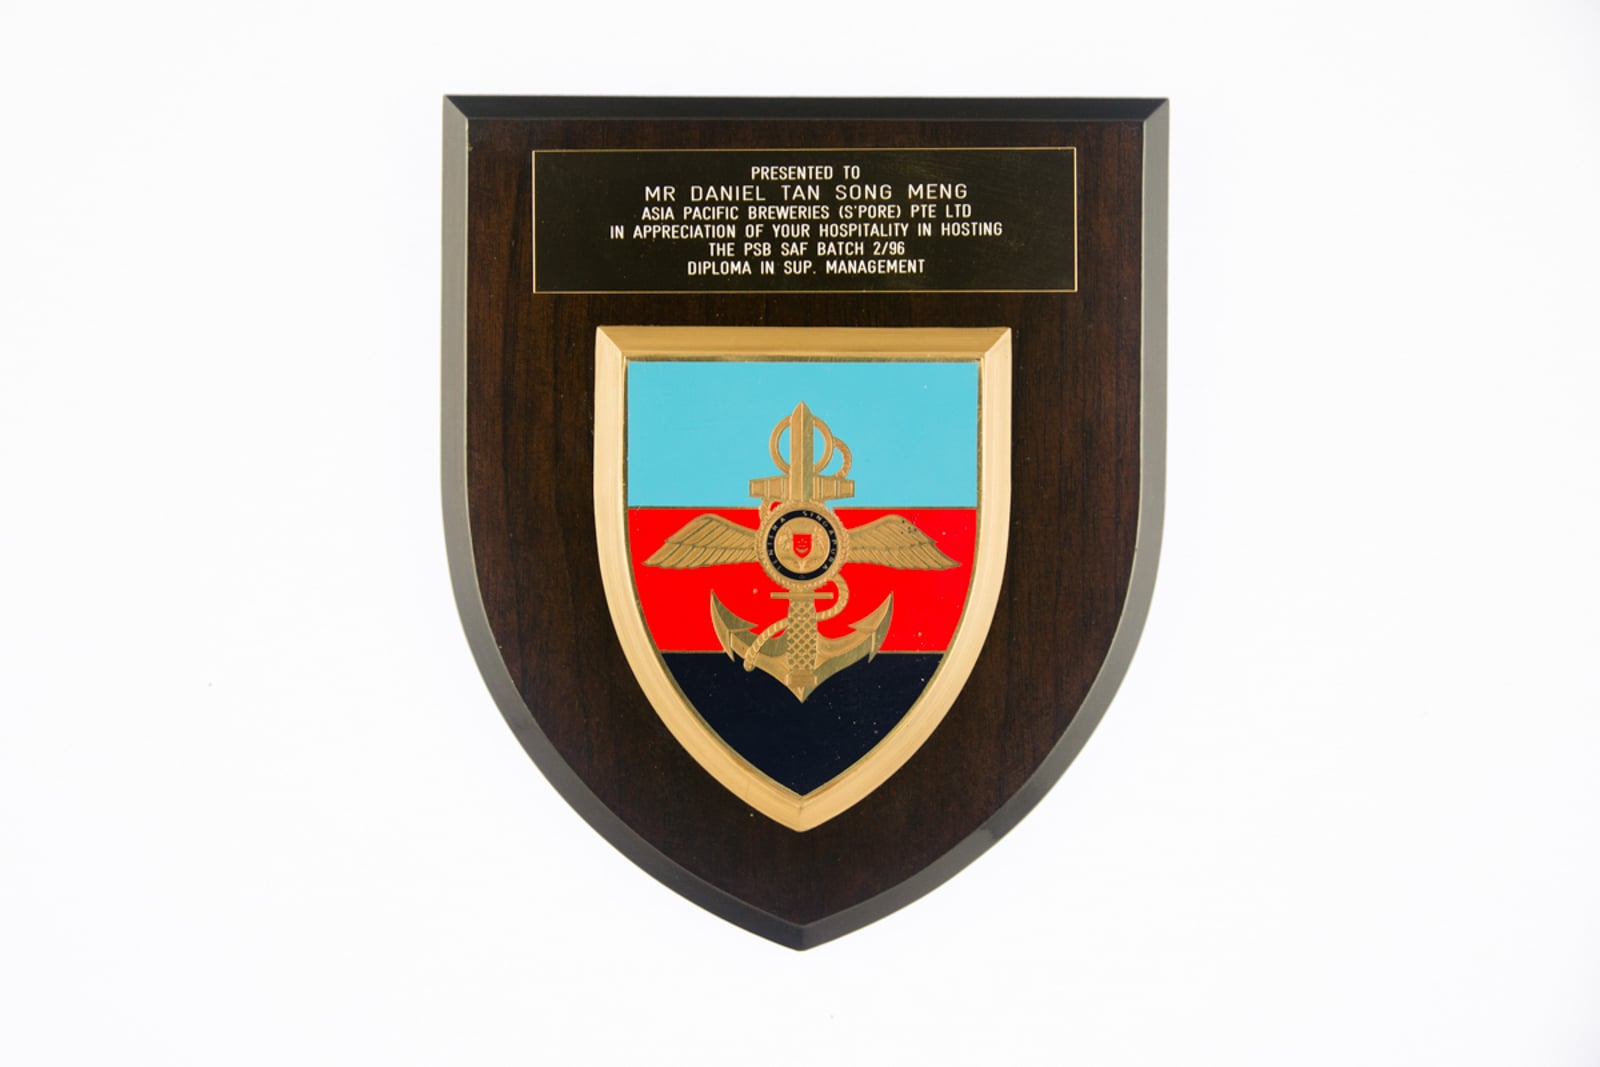 PSB SAF Batch 2/96 Diploma Plaque